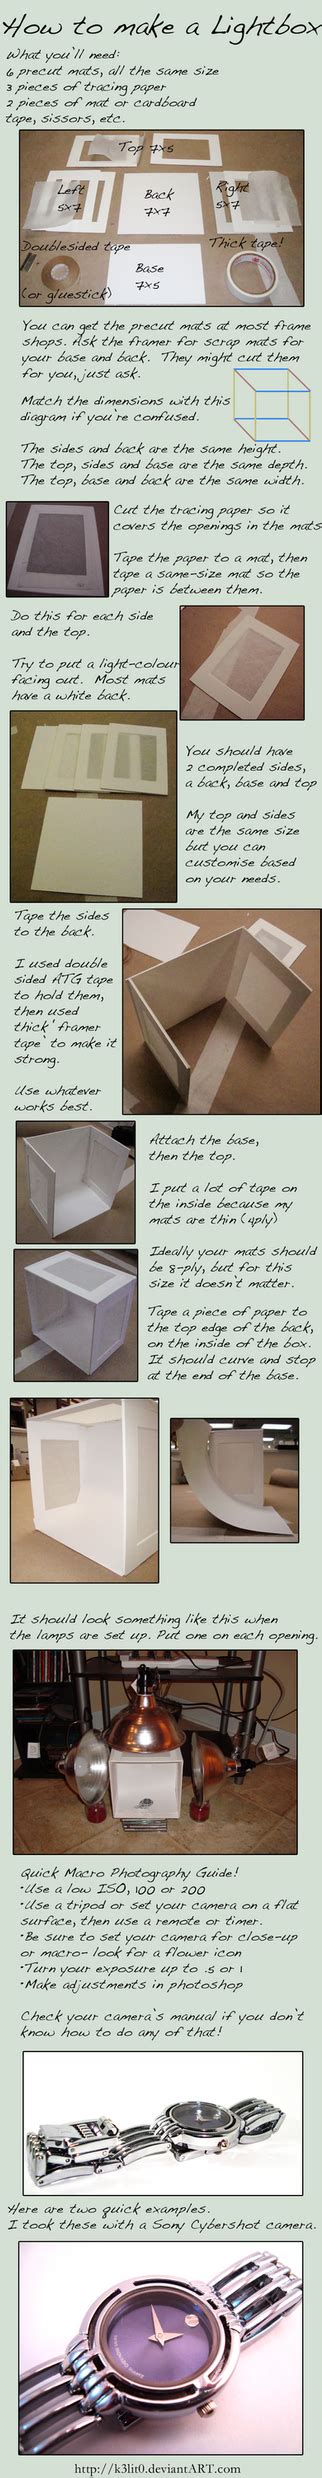 DIY Lightbox by K3lit0 on DeviantArt